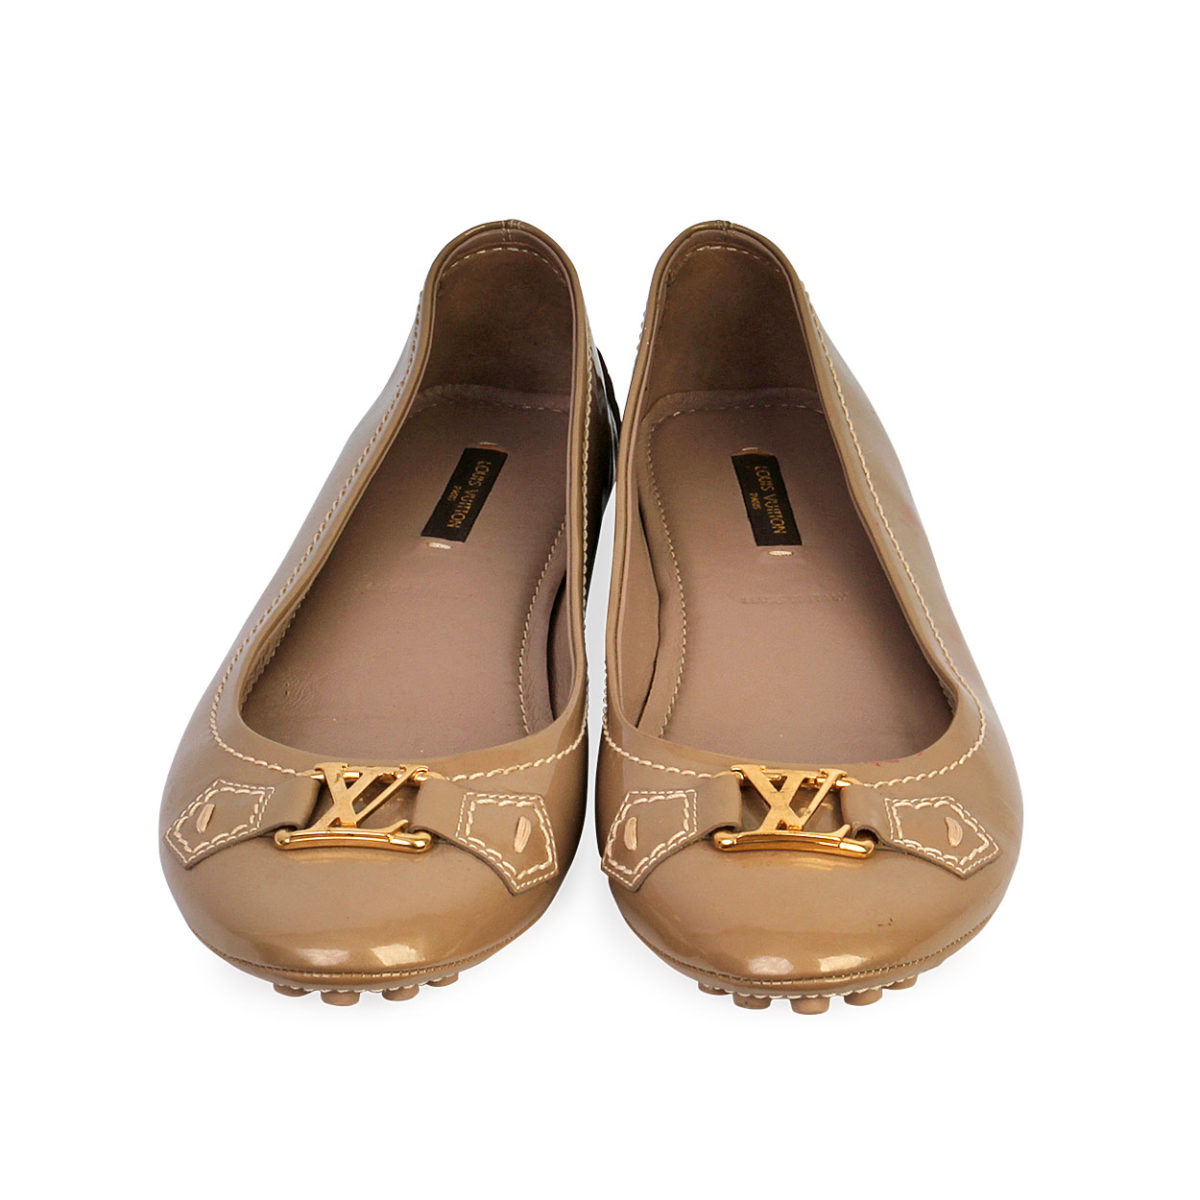 LOUIS VUITTON Patent Leather Oxford Ballet Flats Tan - S: 38.5 (5.5 ...